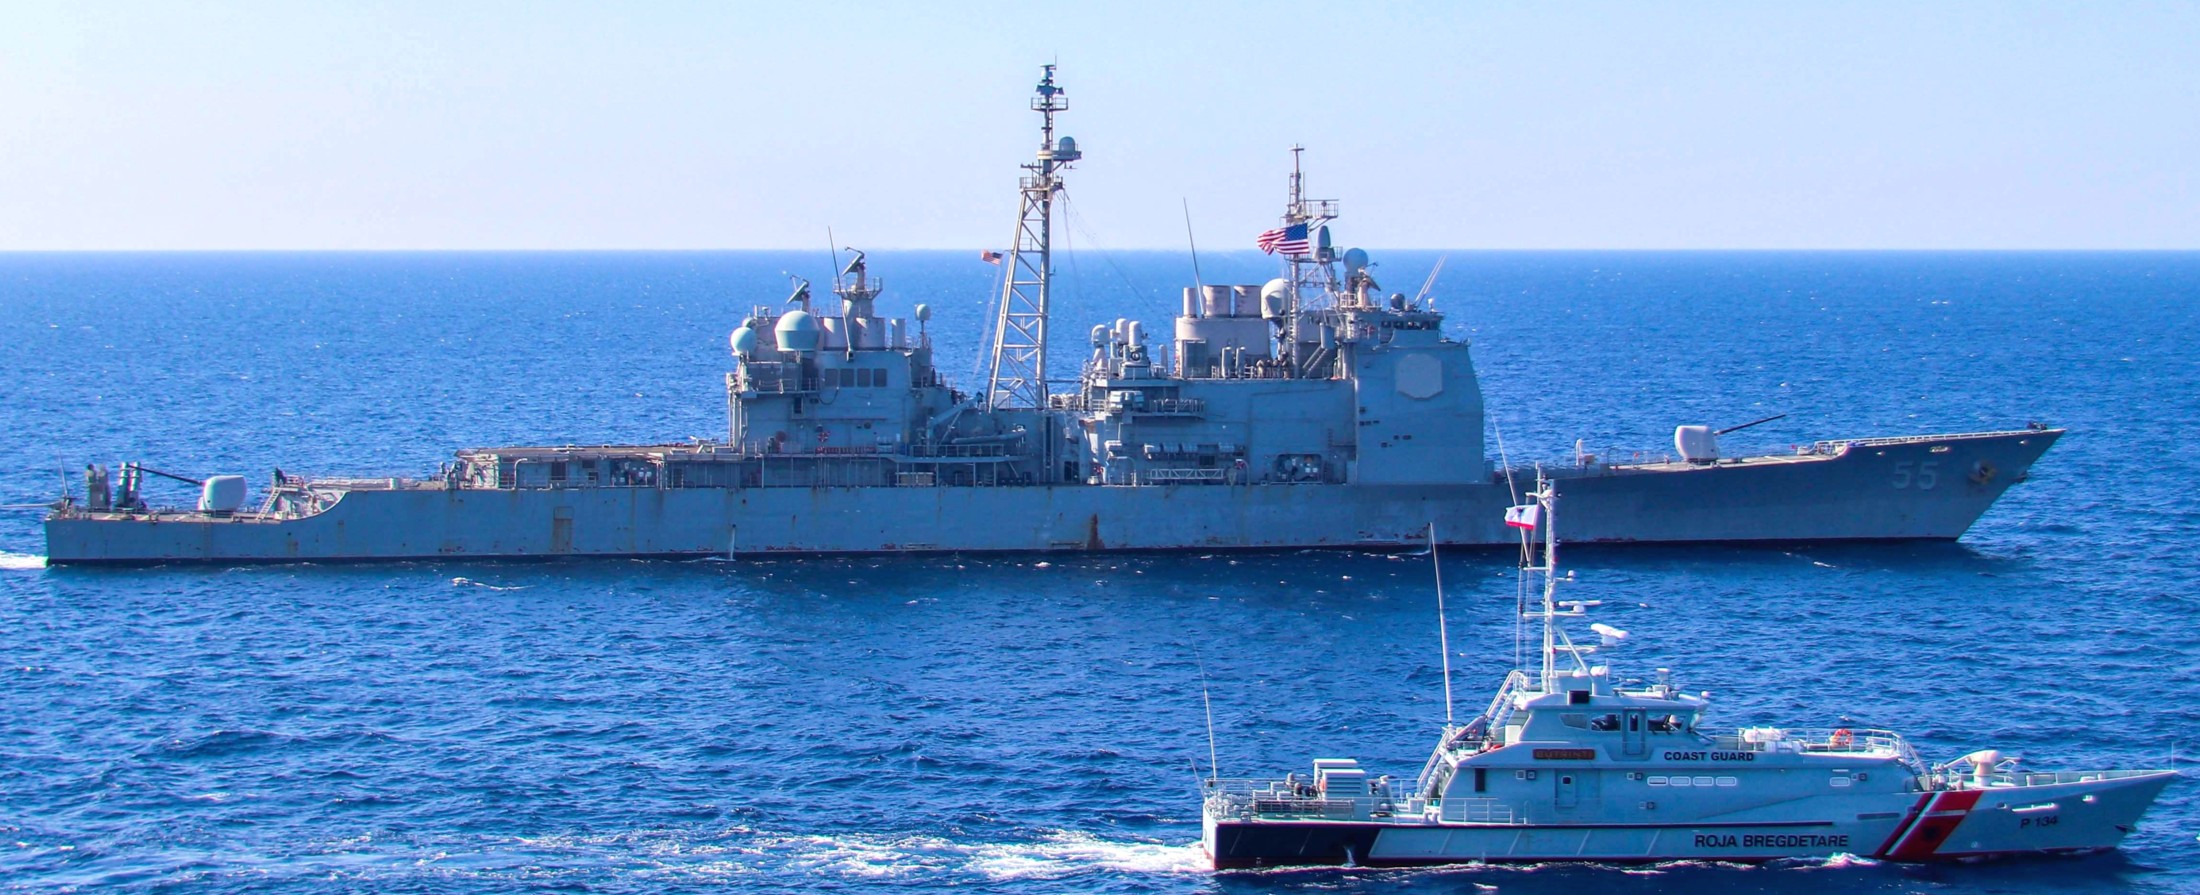 cg-55 uss leyte gulf ticonderoga class guided missile cruiser aegis us navy 84